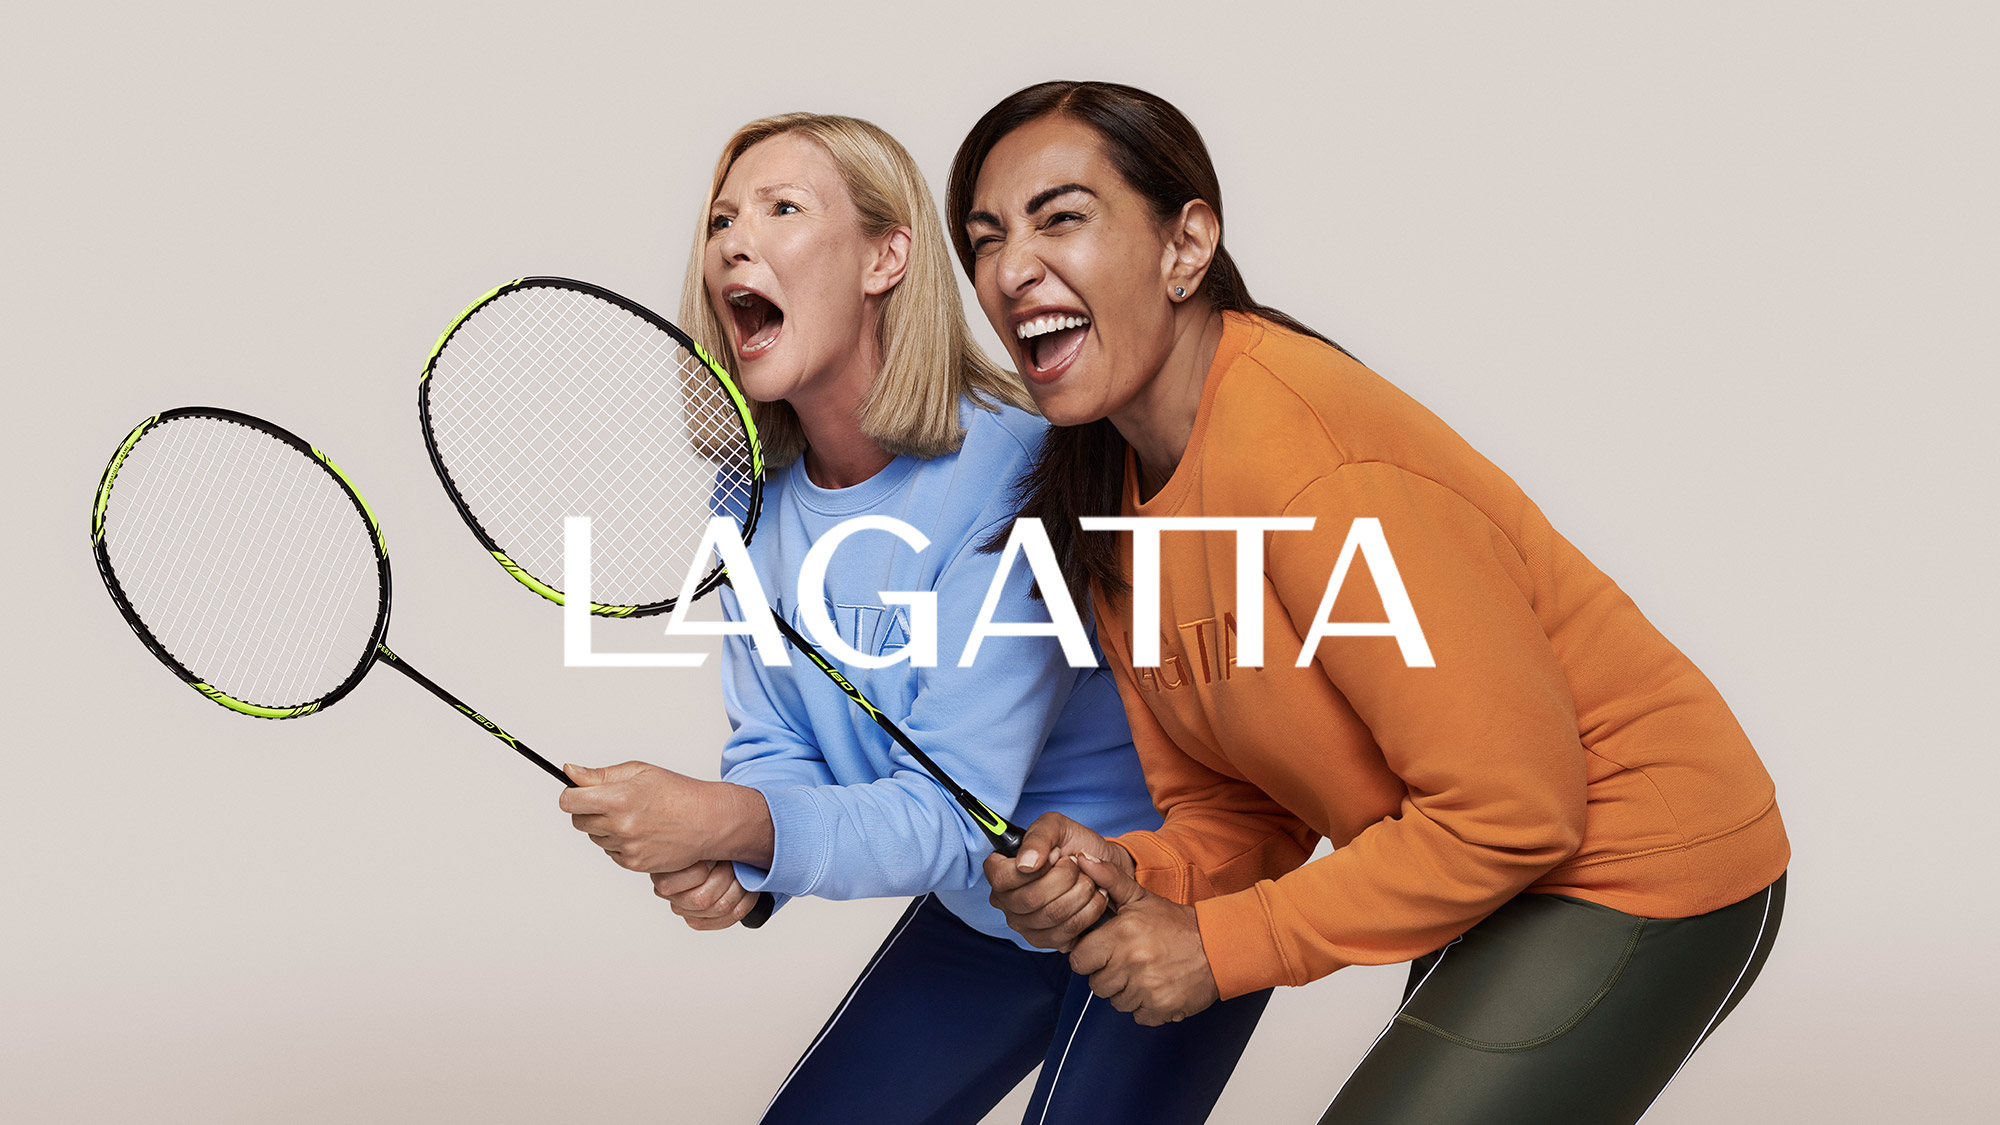 Lagatta-by-Sane-Seven-rackets-2000px